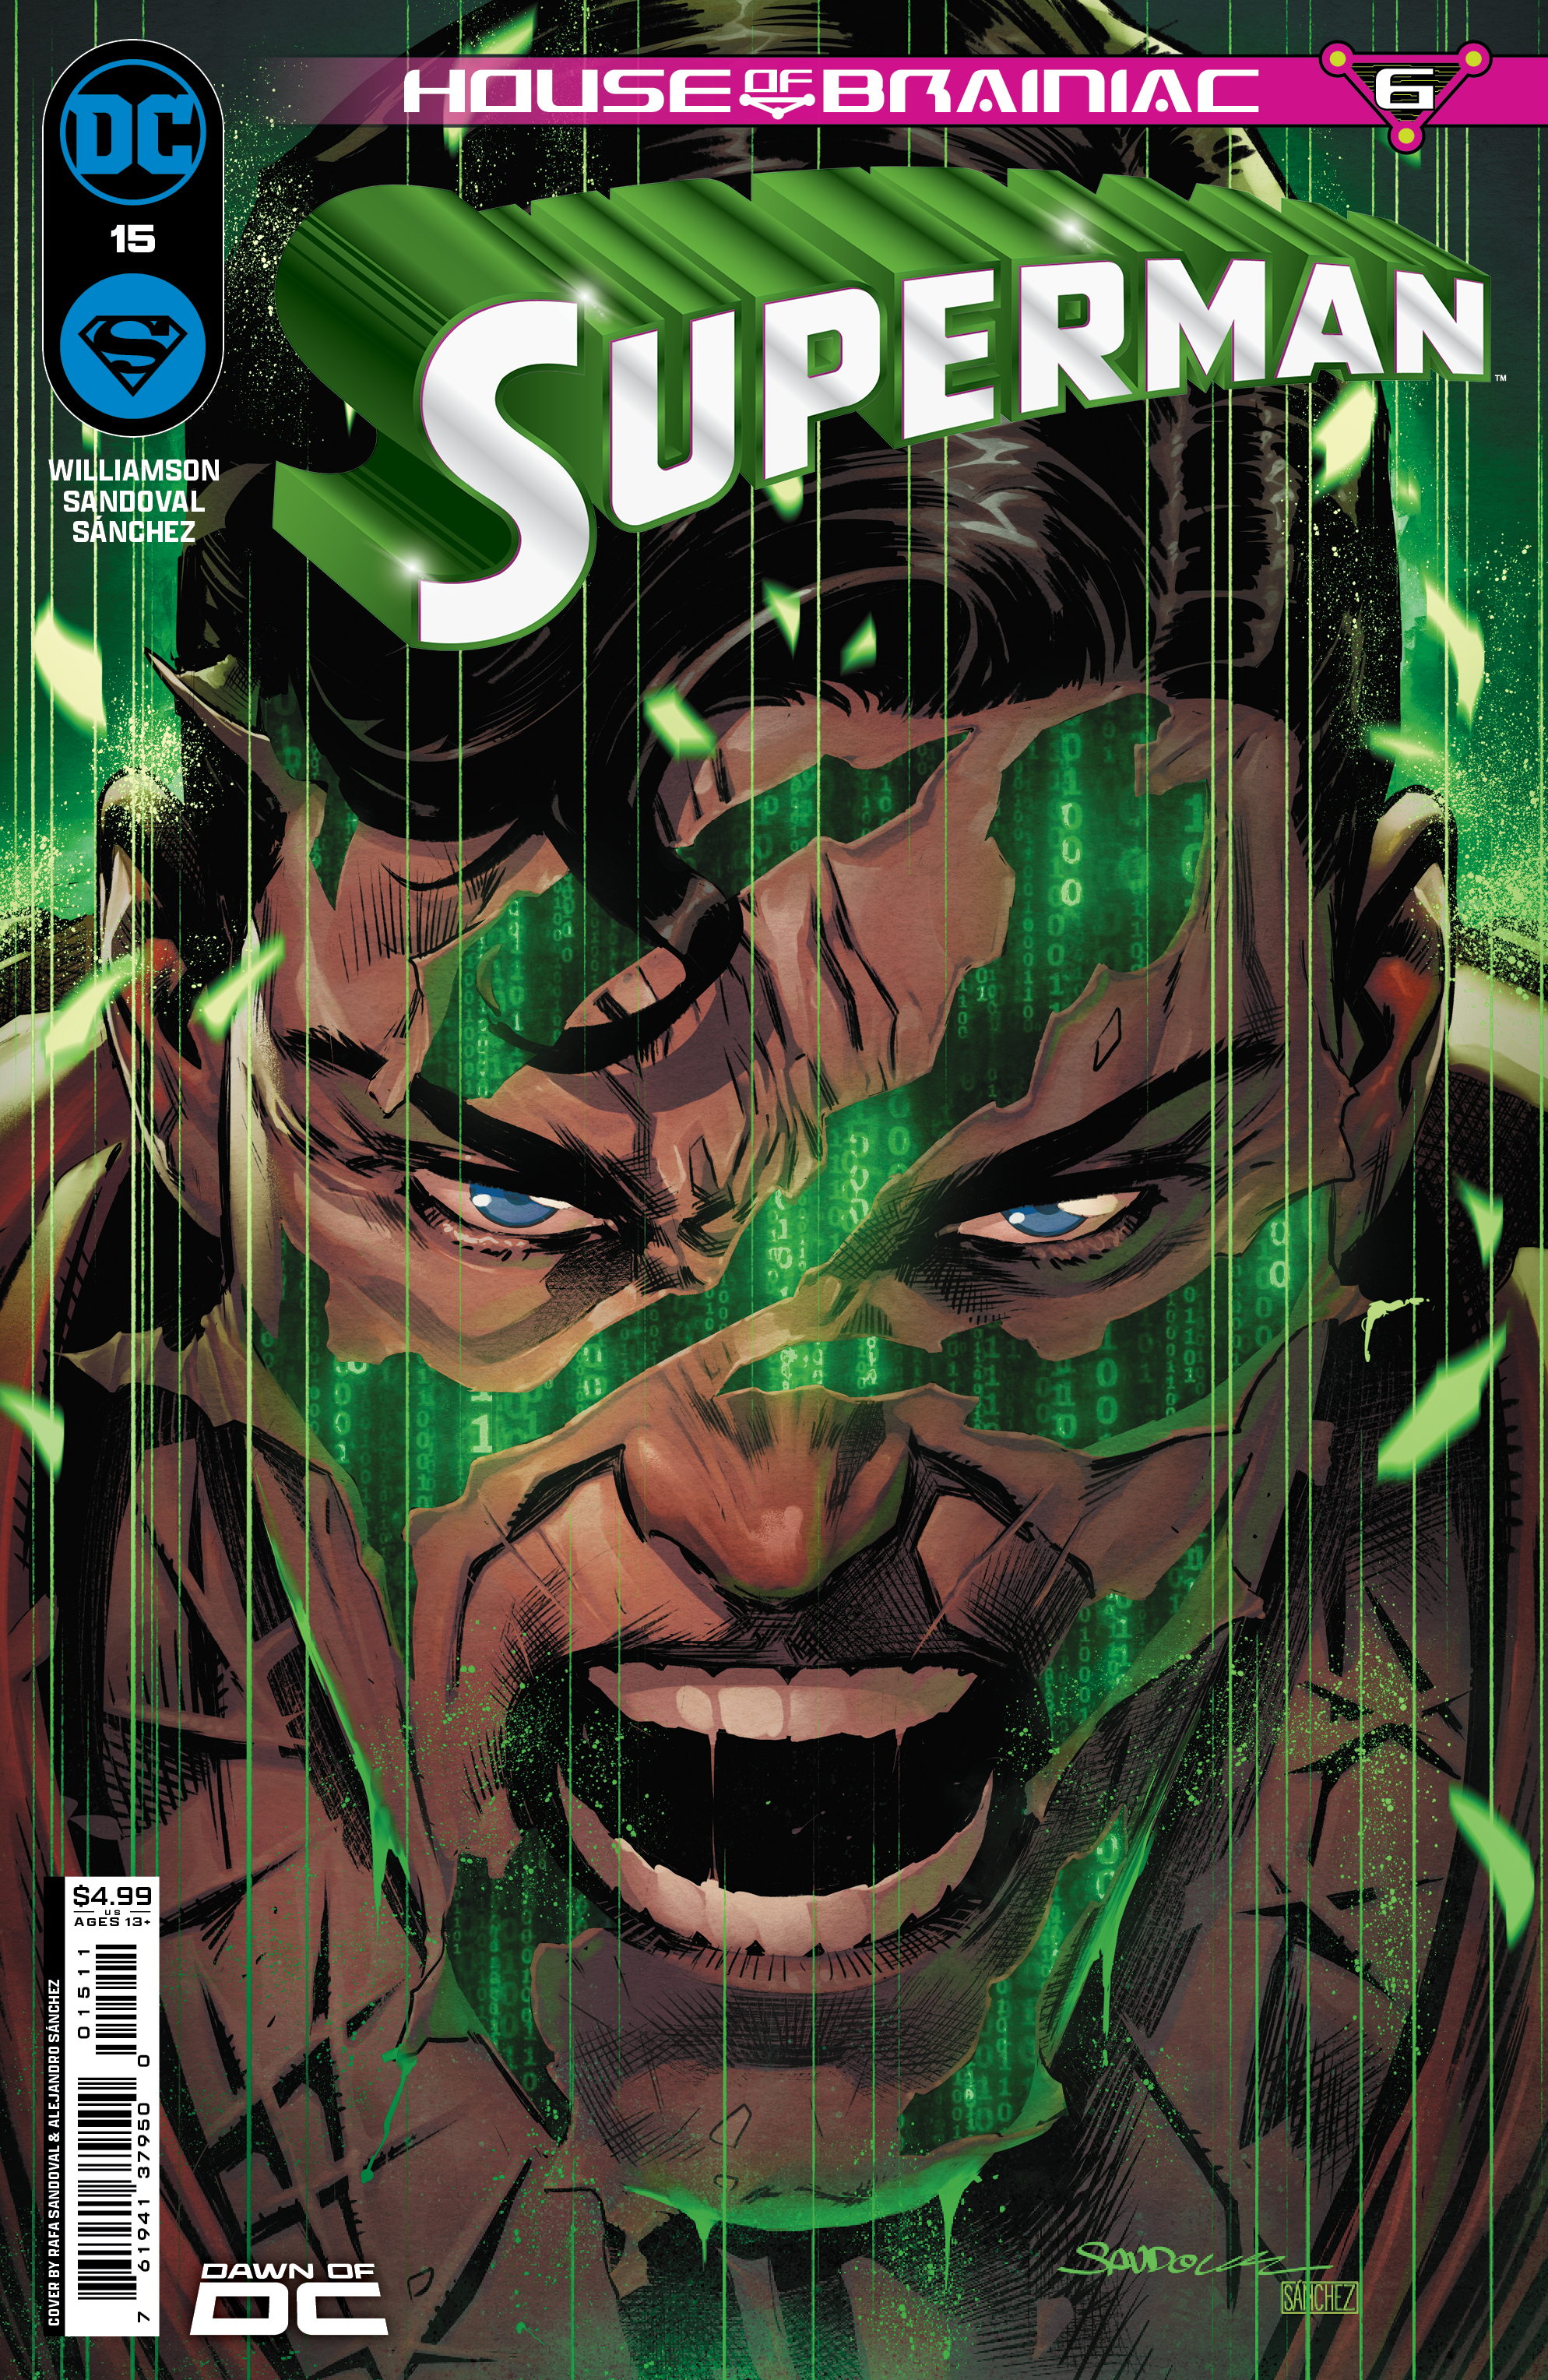 Superman #15 Cover A Rafa Sandoval (House of Brainiac) (Absolute Power)